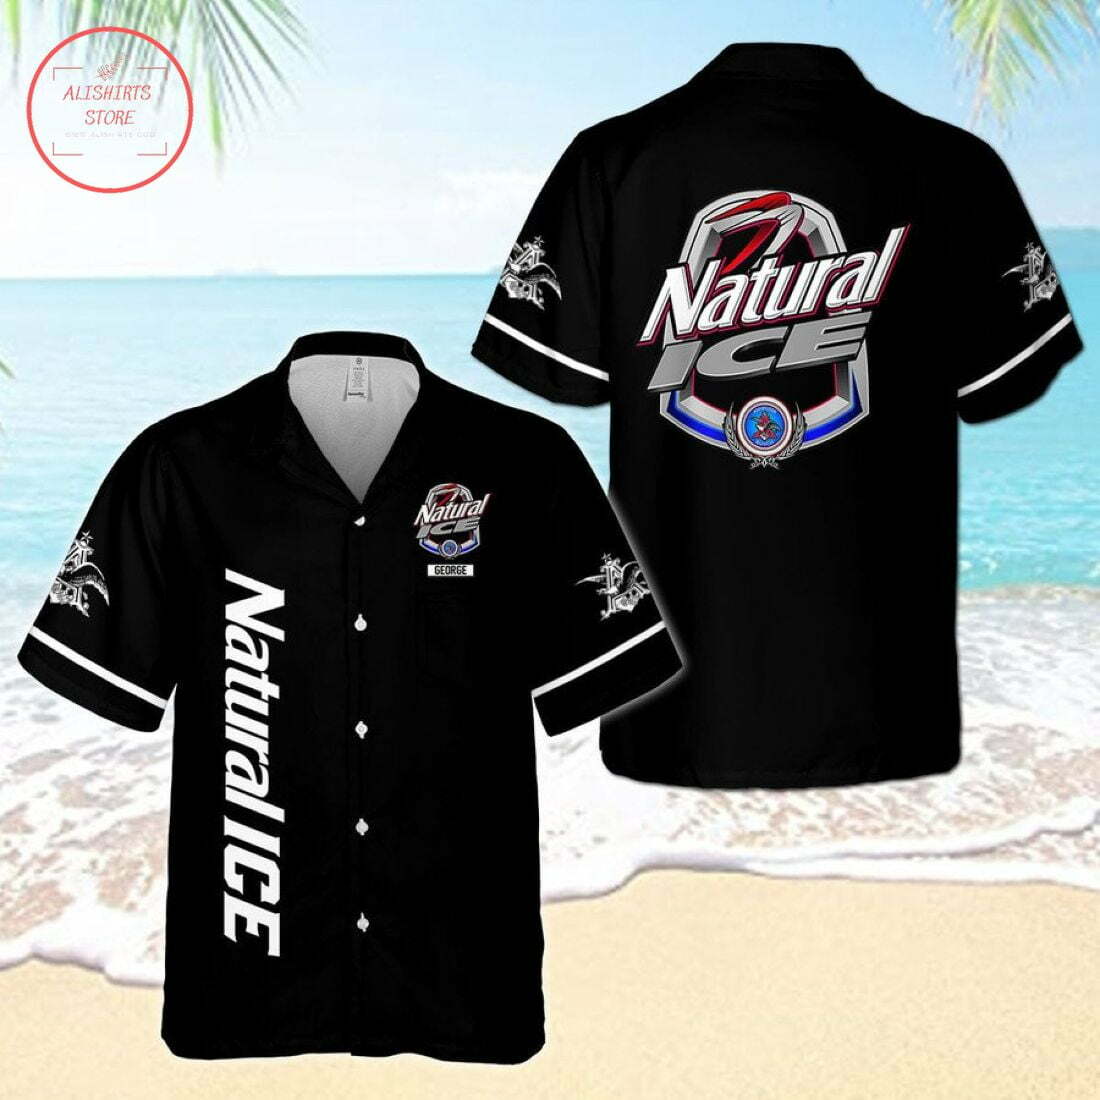 Natural Ice Black Hawaiian Shirt Summer Beach Outfit